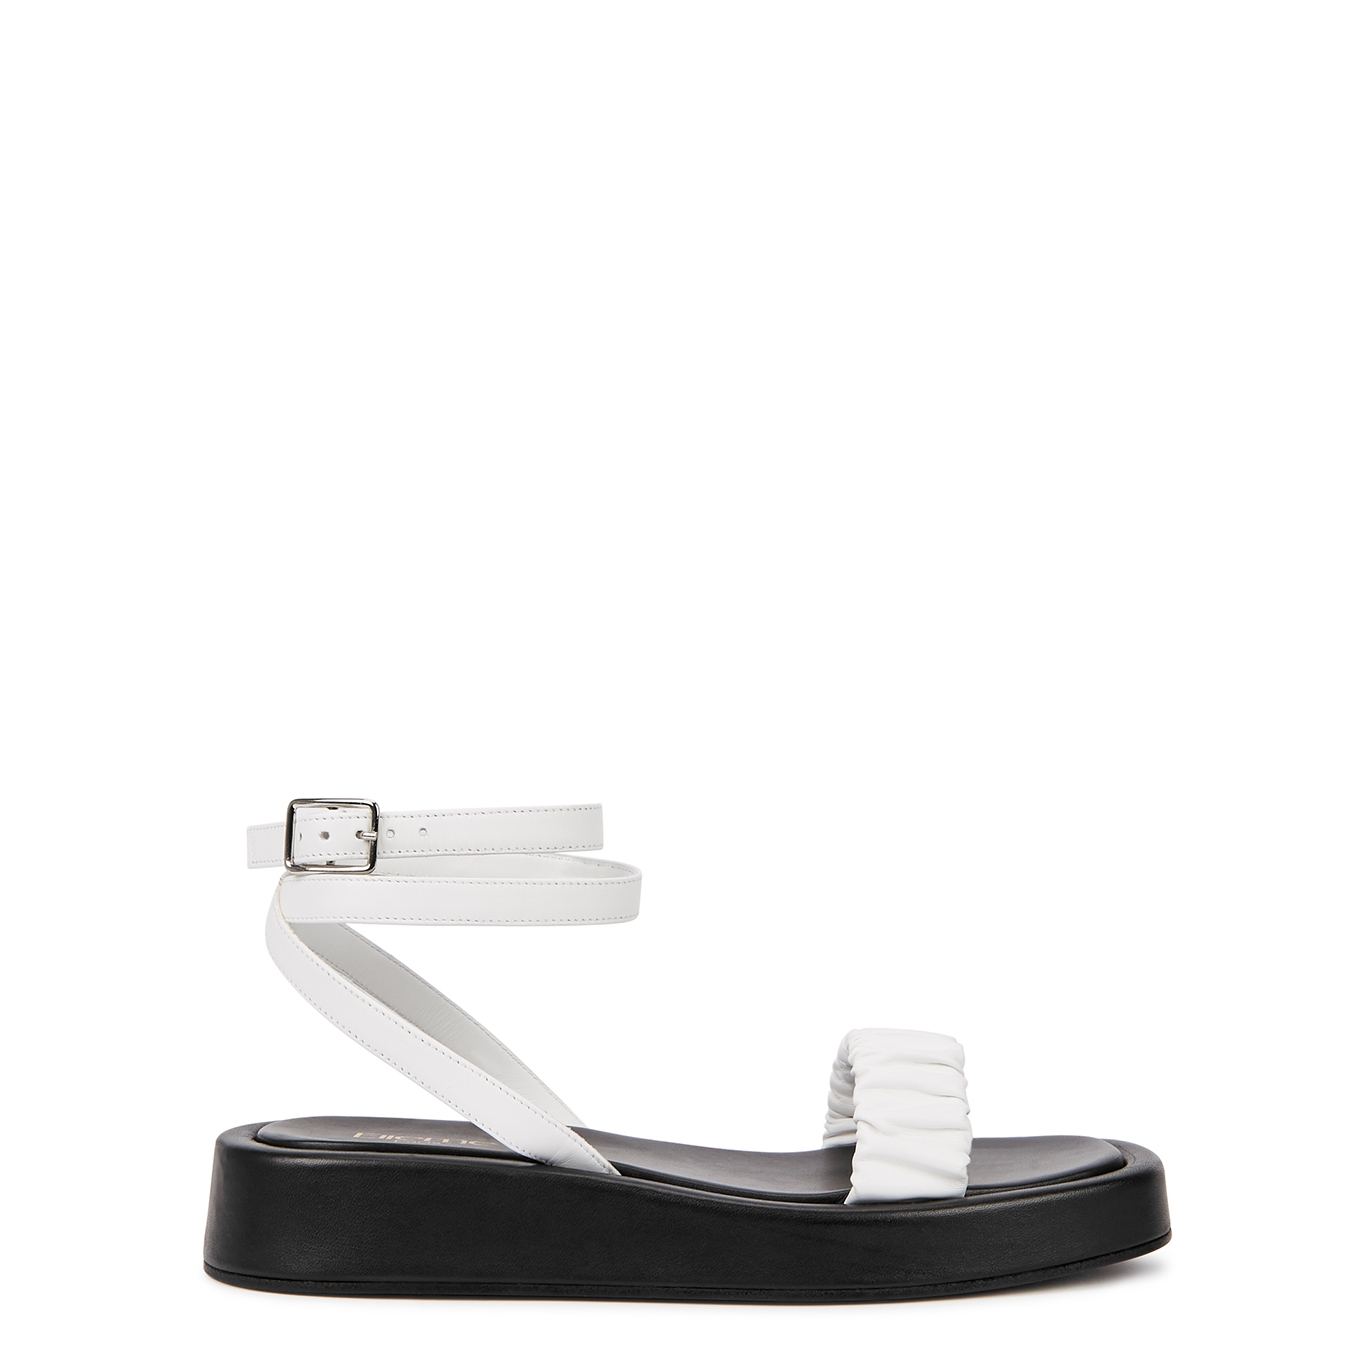 Elleme Chouchou White Leather Flatform Sandals - Black And White - 7